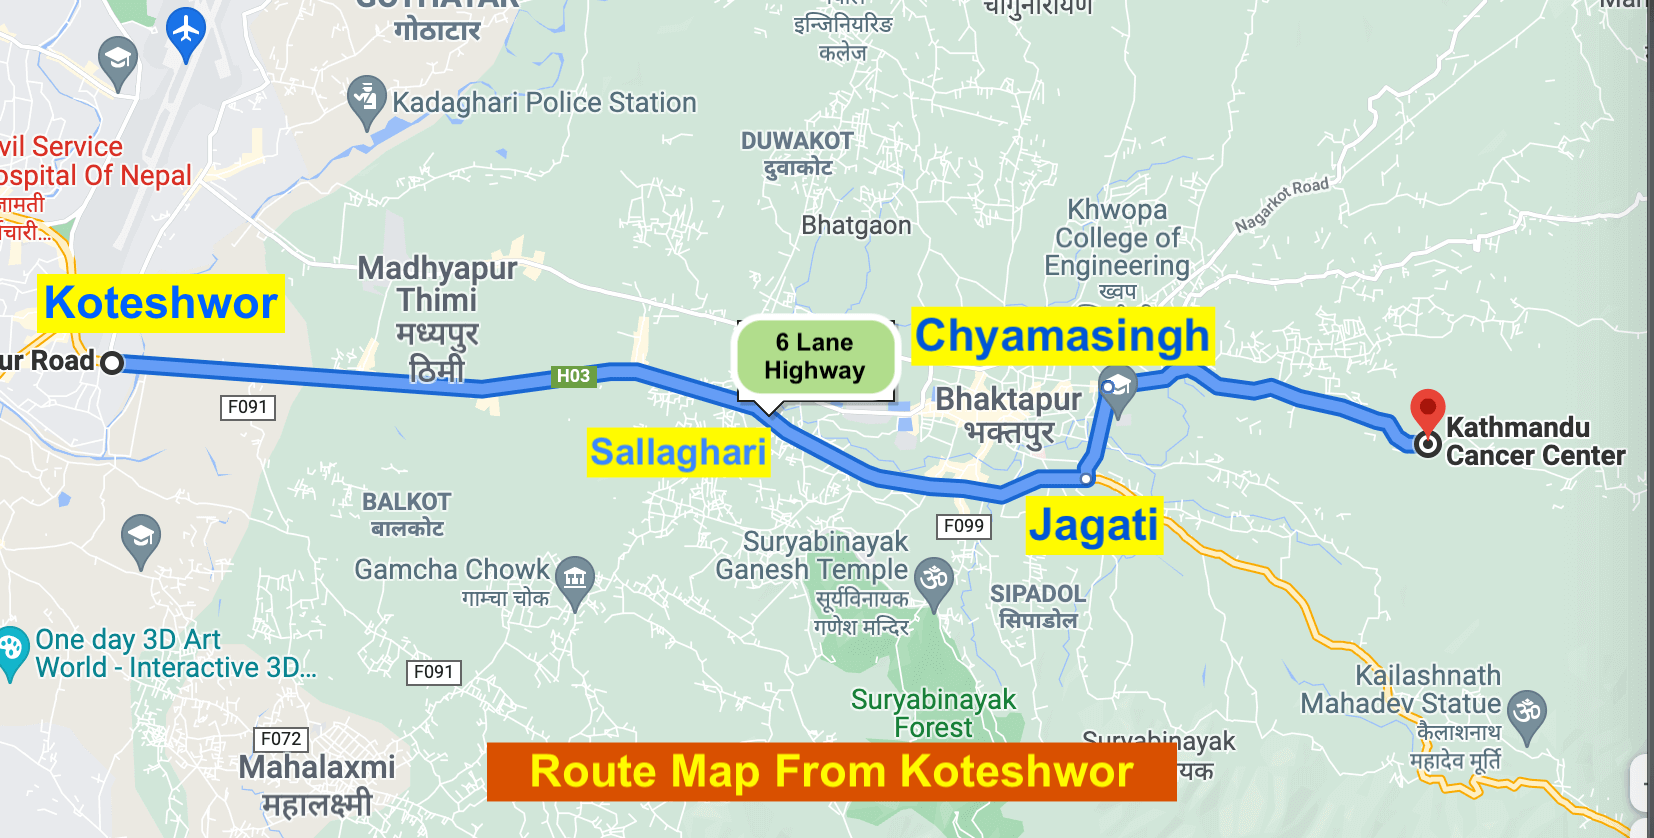 route map of Kathmandu cancer center hospital